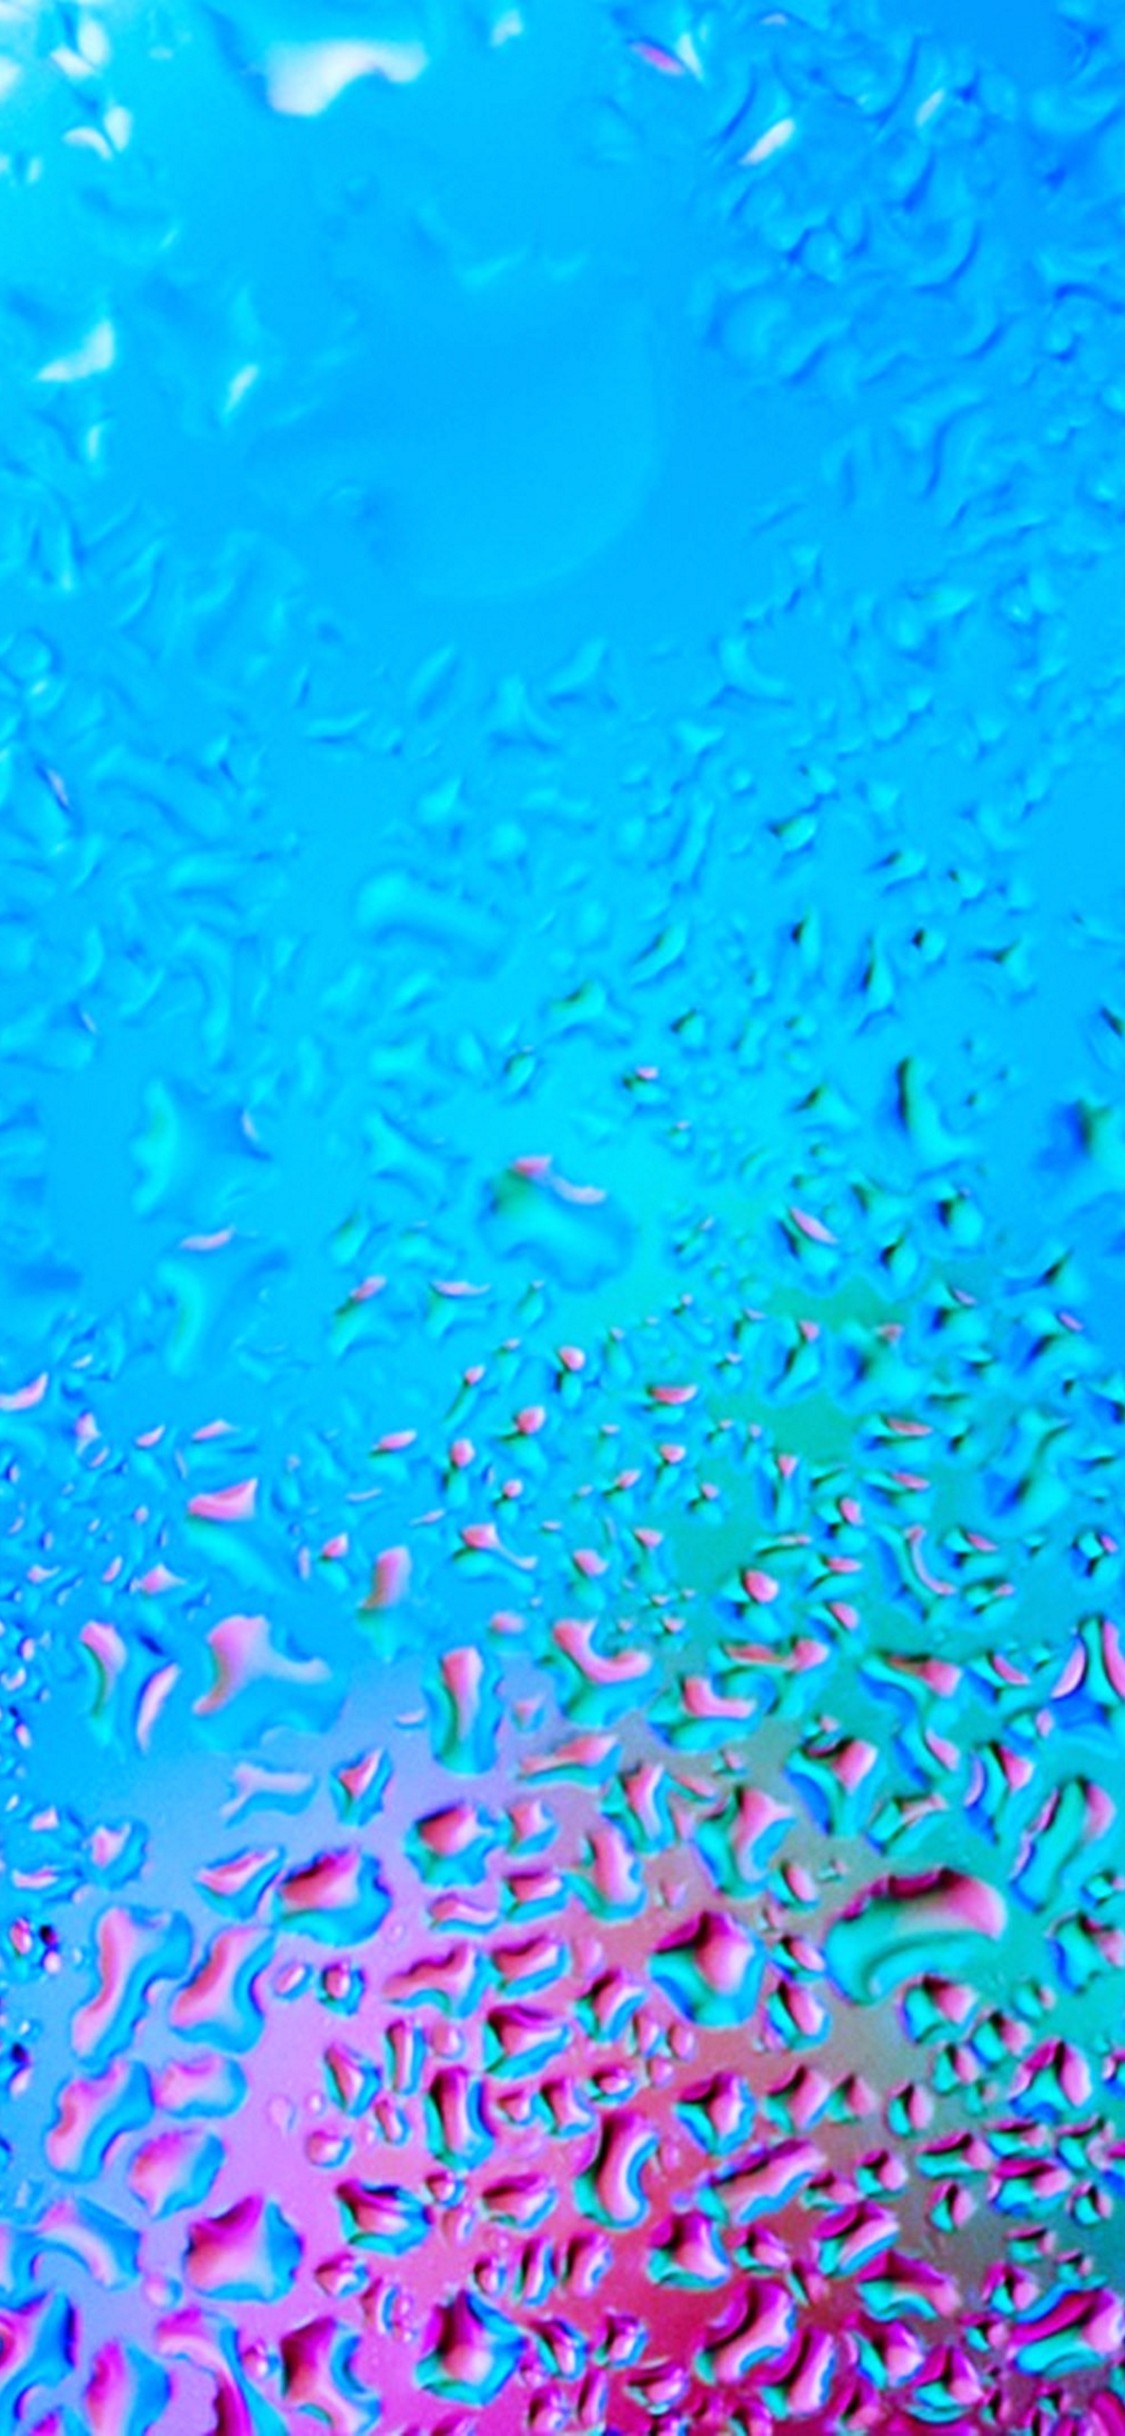 Waterdrops Bright Hd Desktop Background